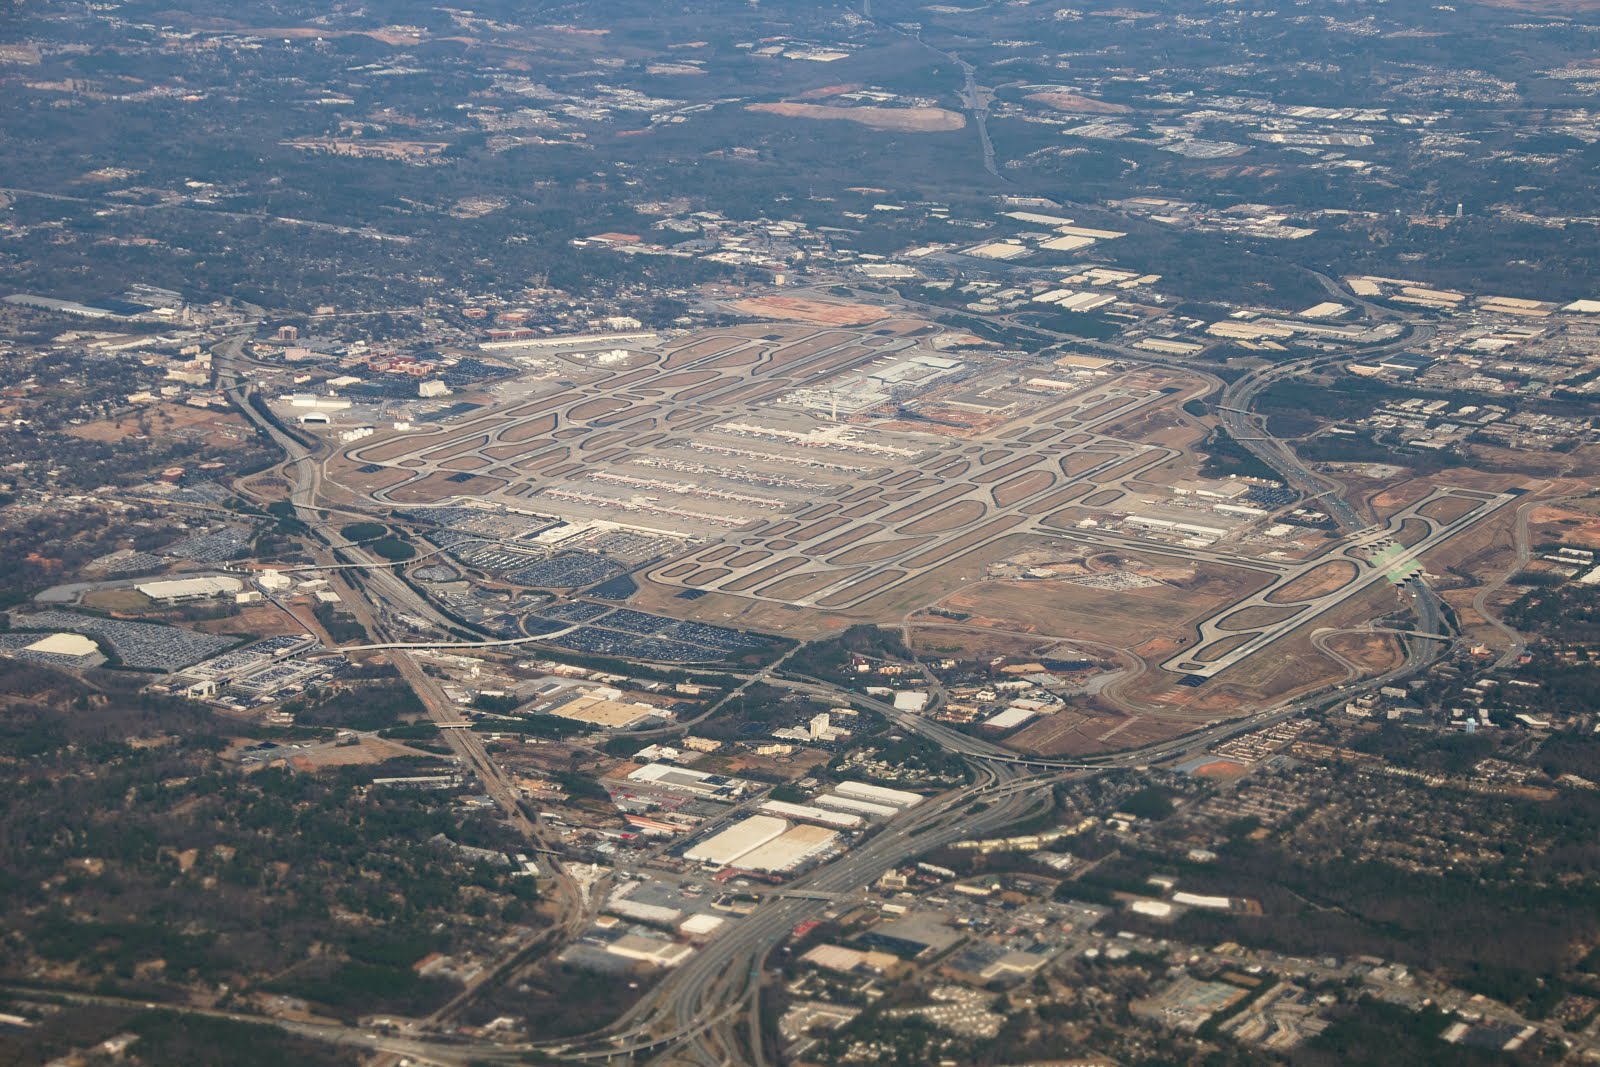 HartsfieldJackson Atlanta International Airport